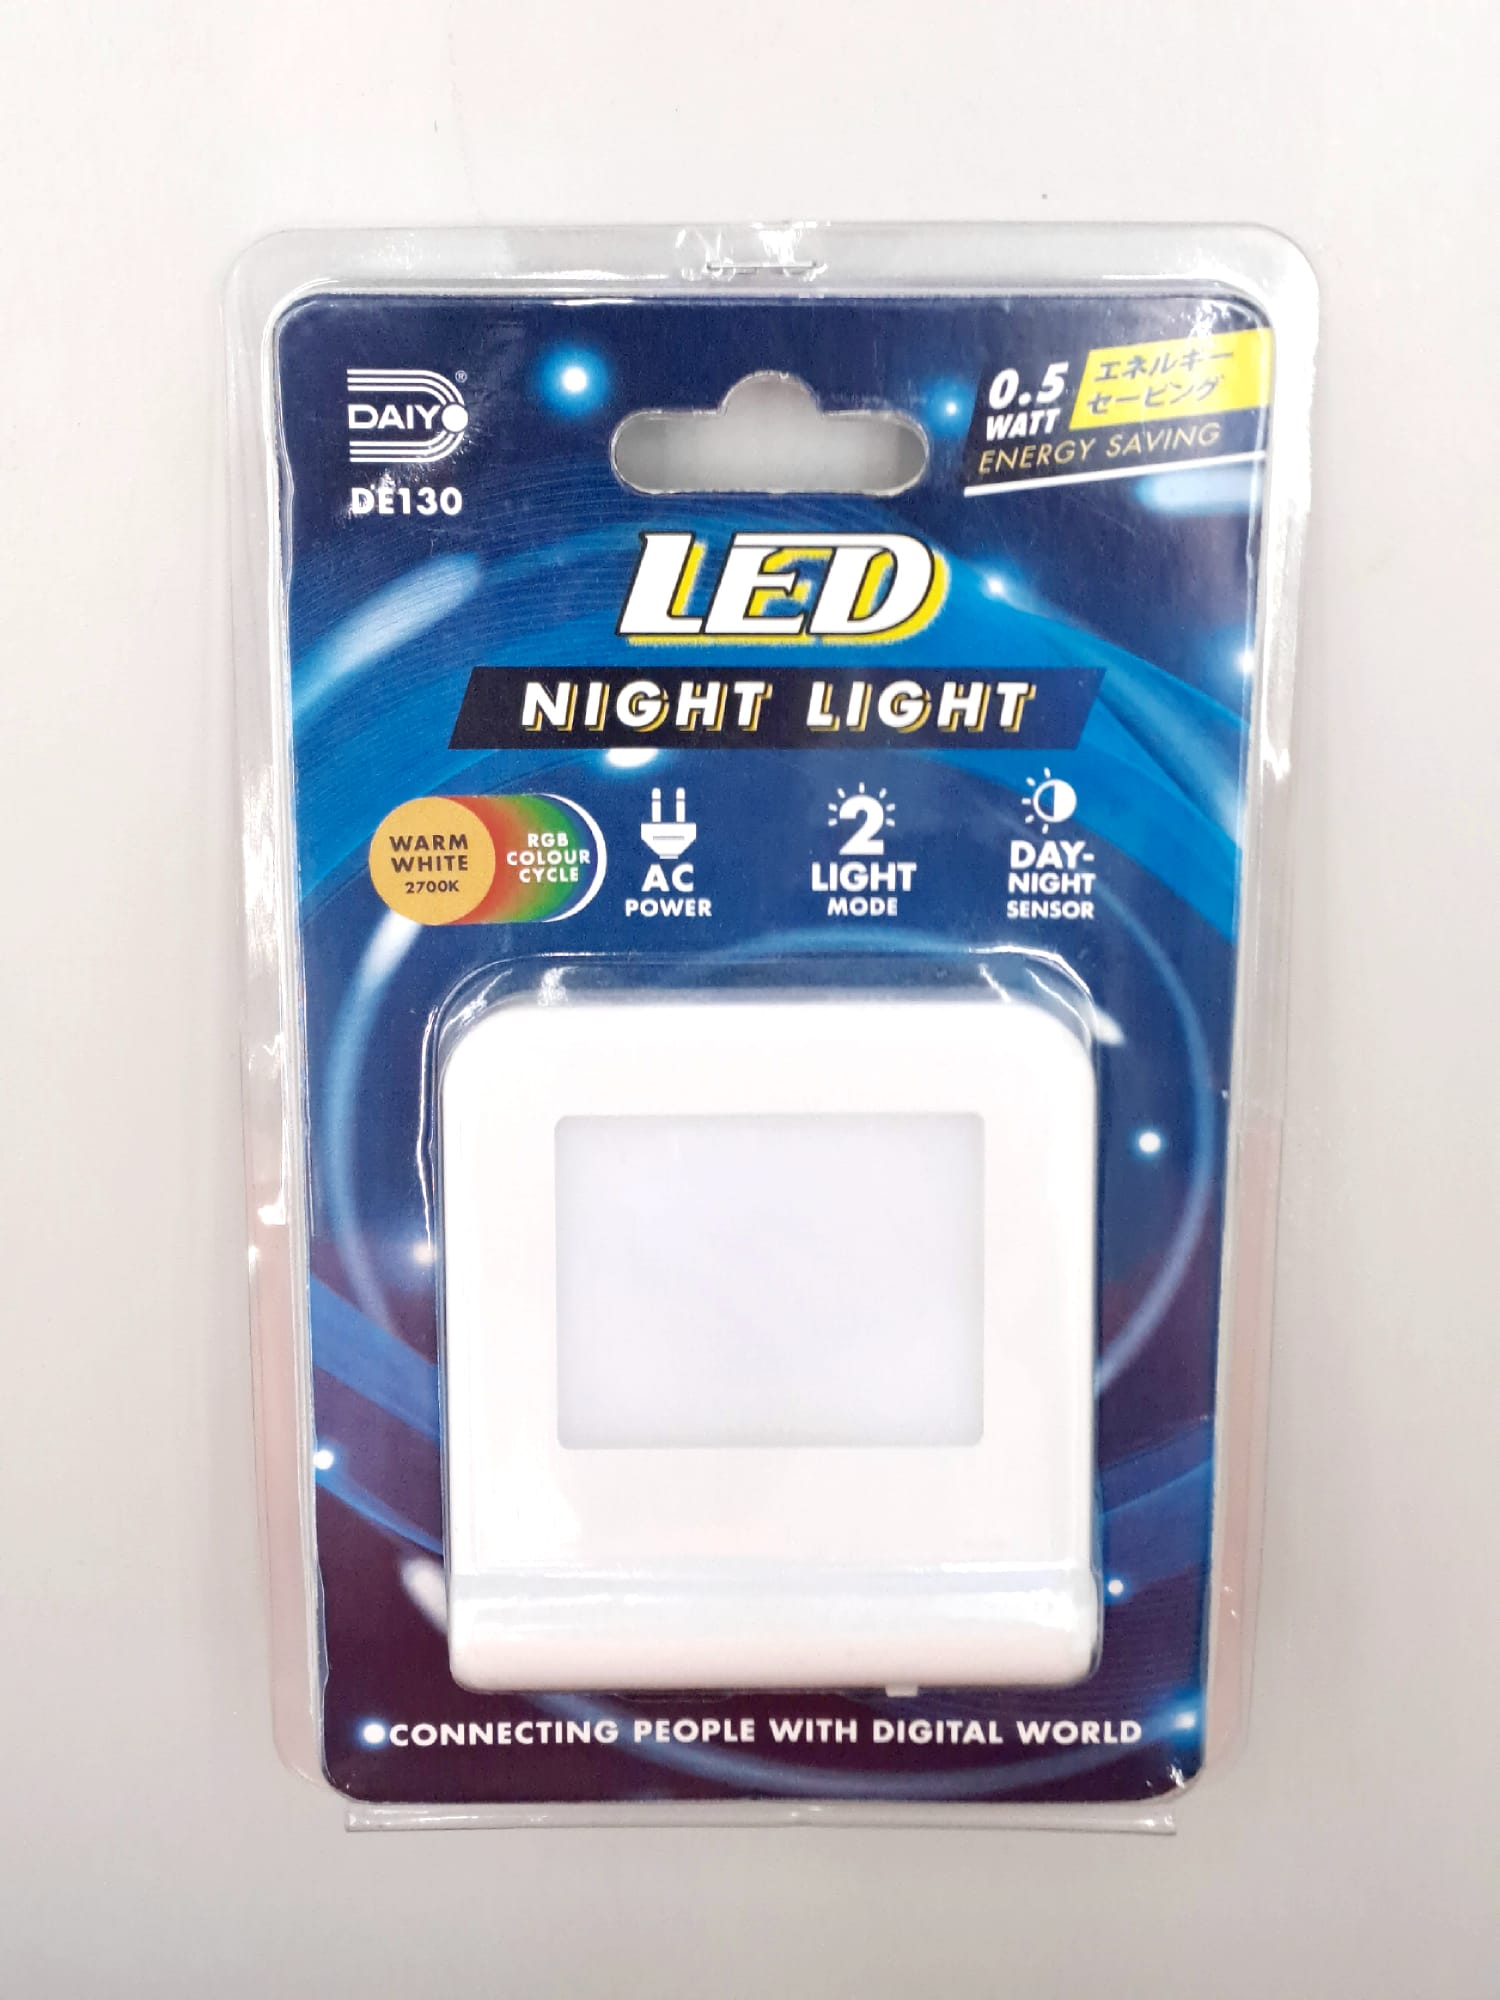 Daiyo LED Night Light 2 Light Modes & Day/Night Sensor